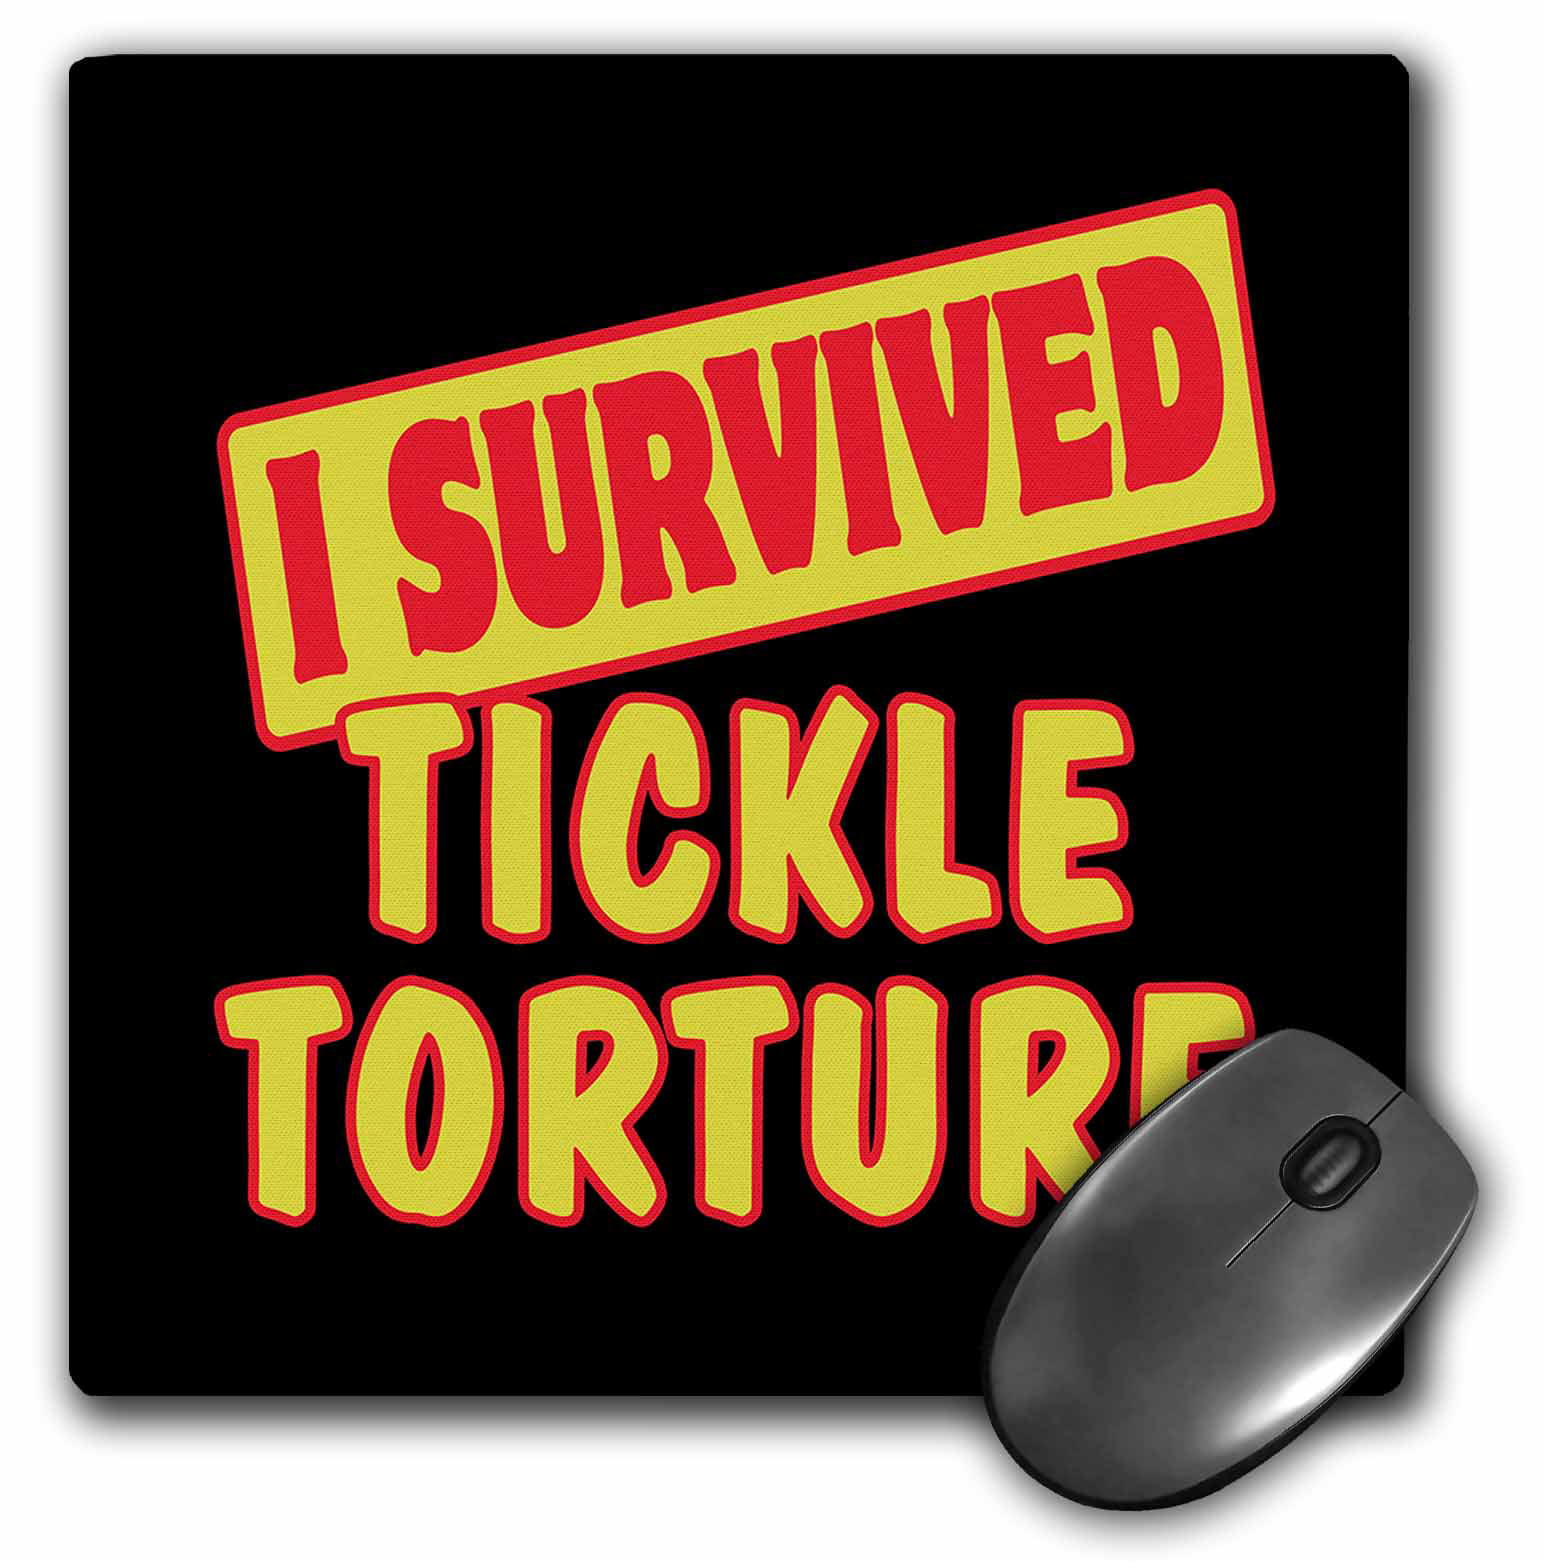 Celebrity Tickle Torture